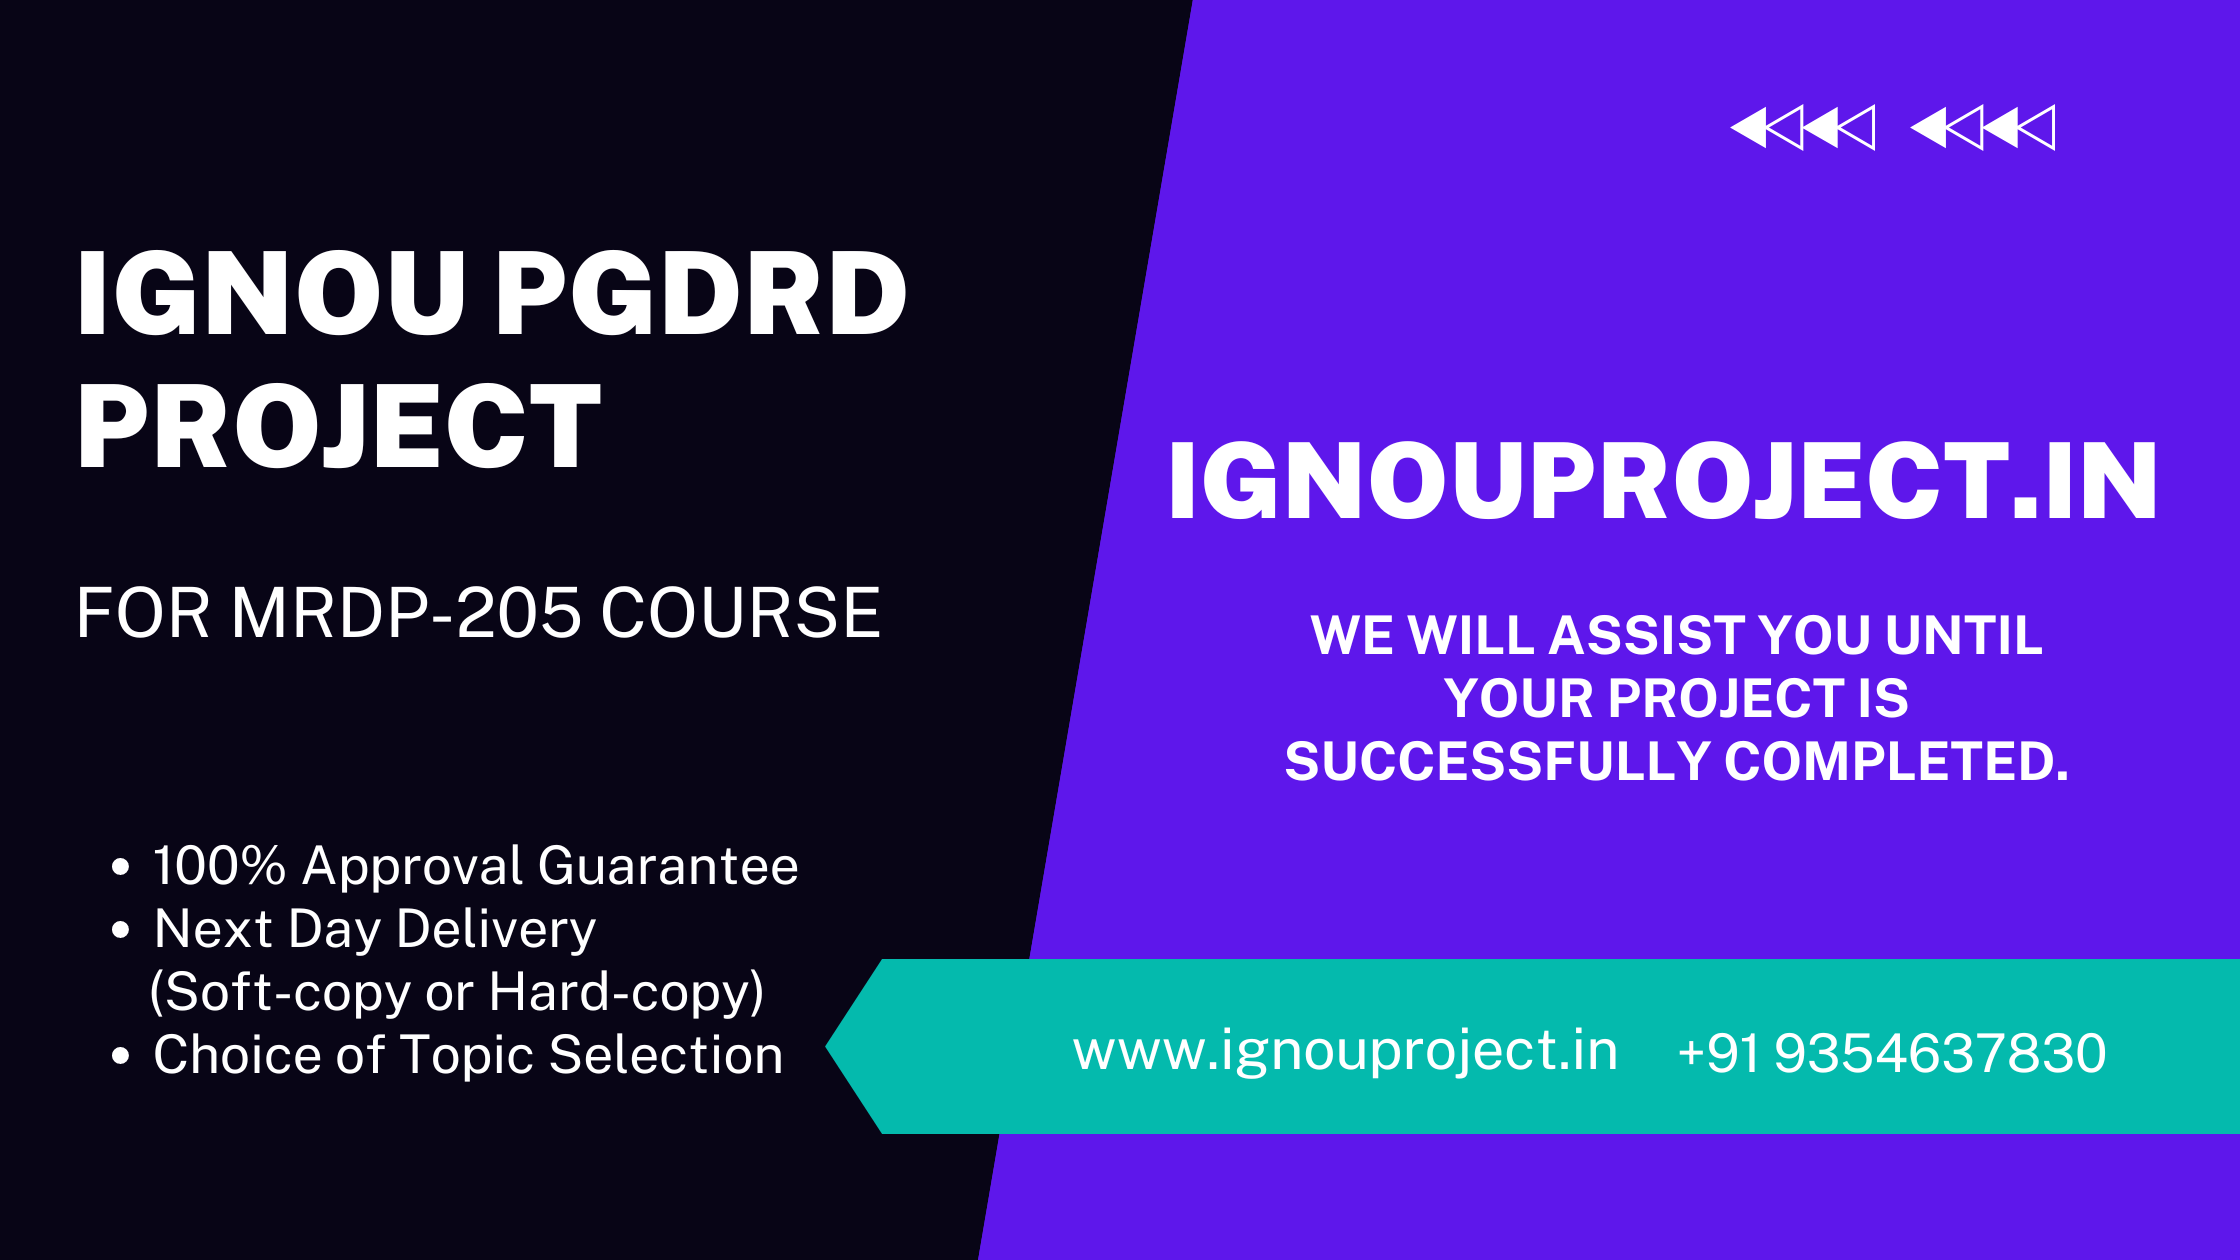 ignou pgdrd project mrdp 205